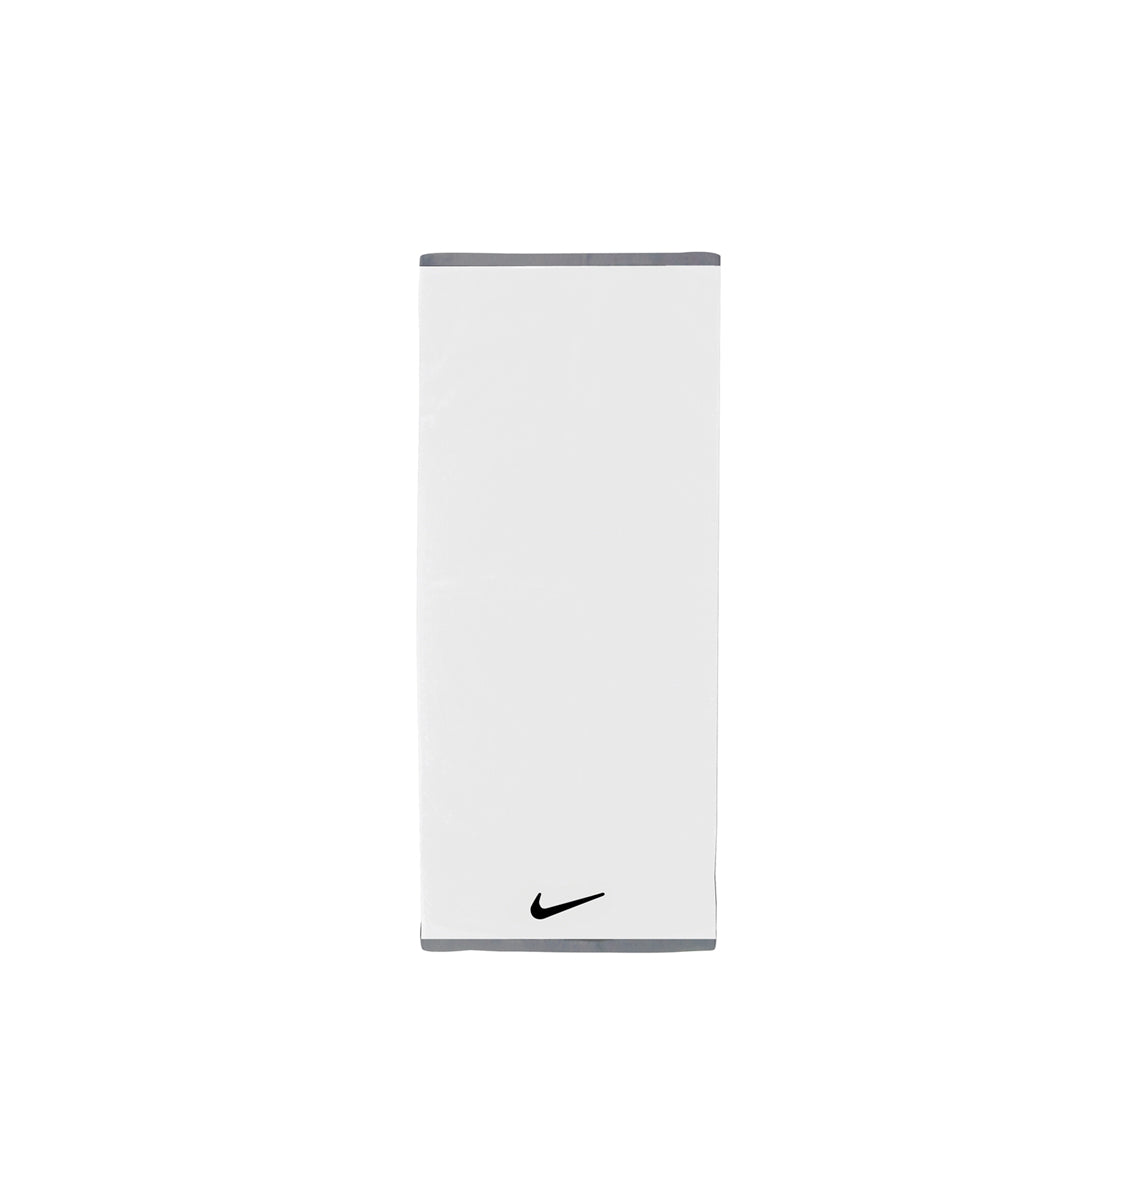 Nike Fundamental Towel -  Medium - White/Black - 1